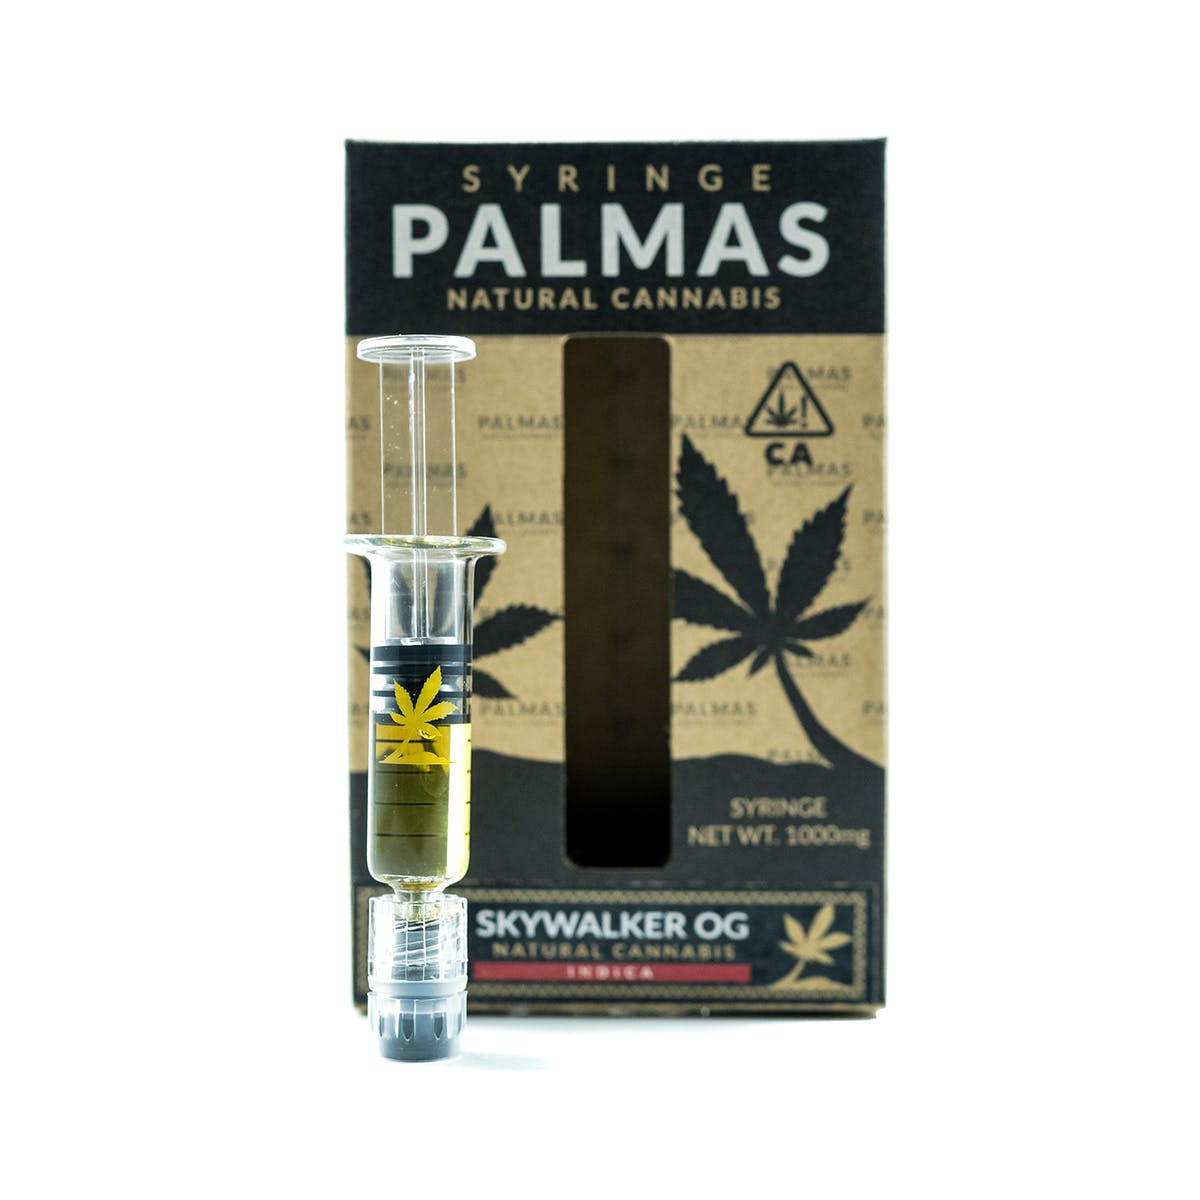 marijuana-dispensaries-pomonas-plug-20-cap-in-pomona-palmas-syringe-skywalker-og-1000mg